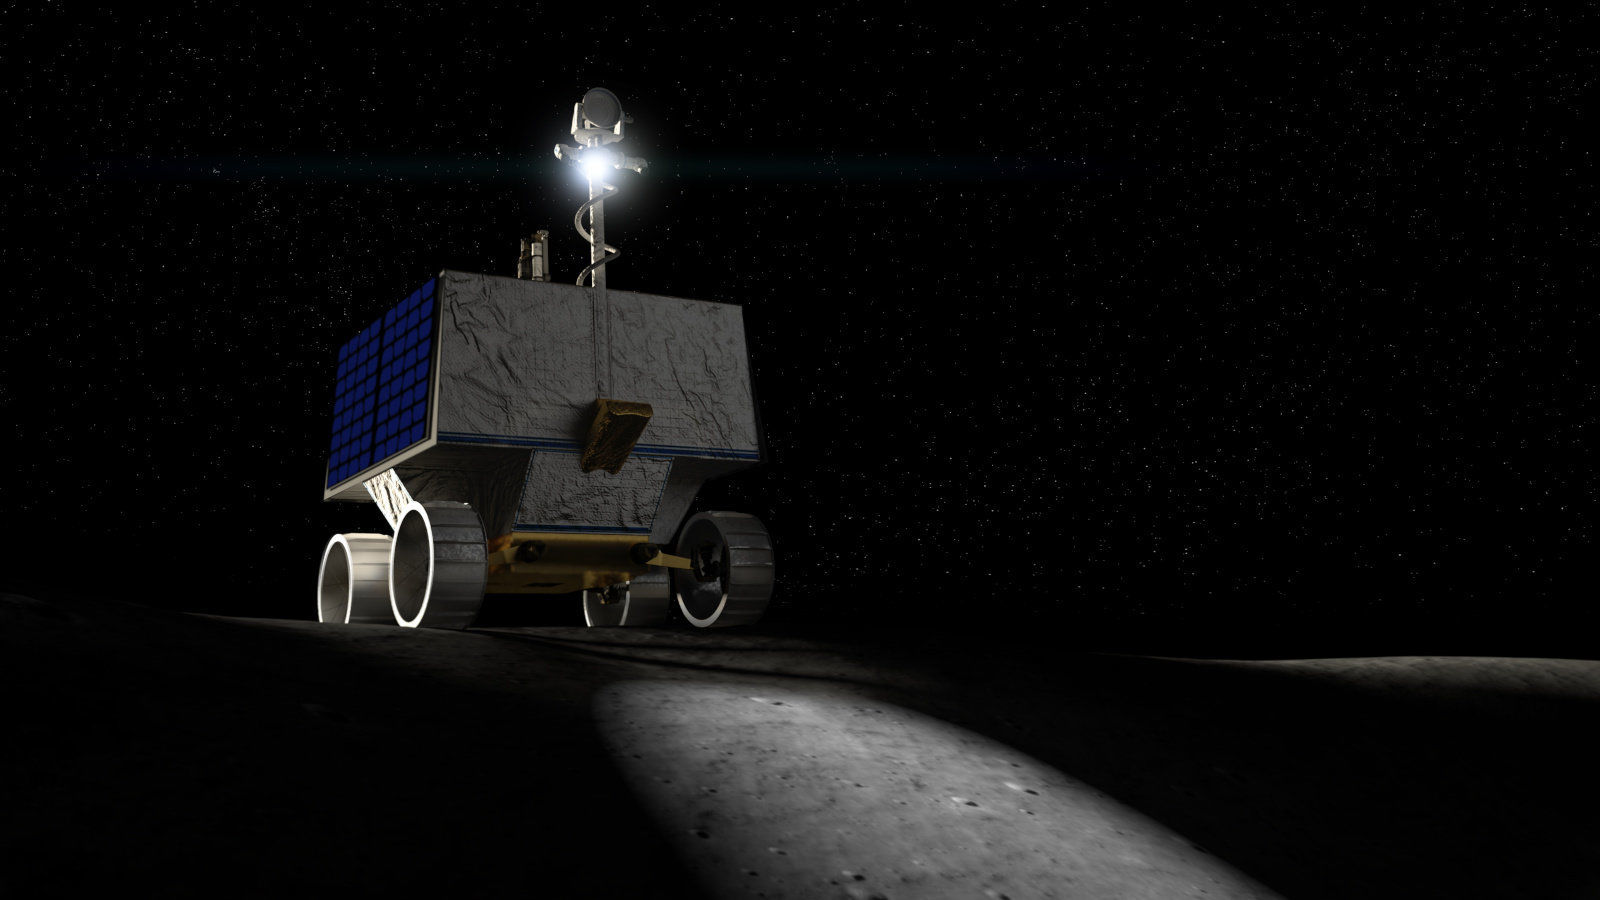 NASAが月に水資源を調査するロボット「VIPER」を送ると発表